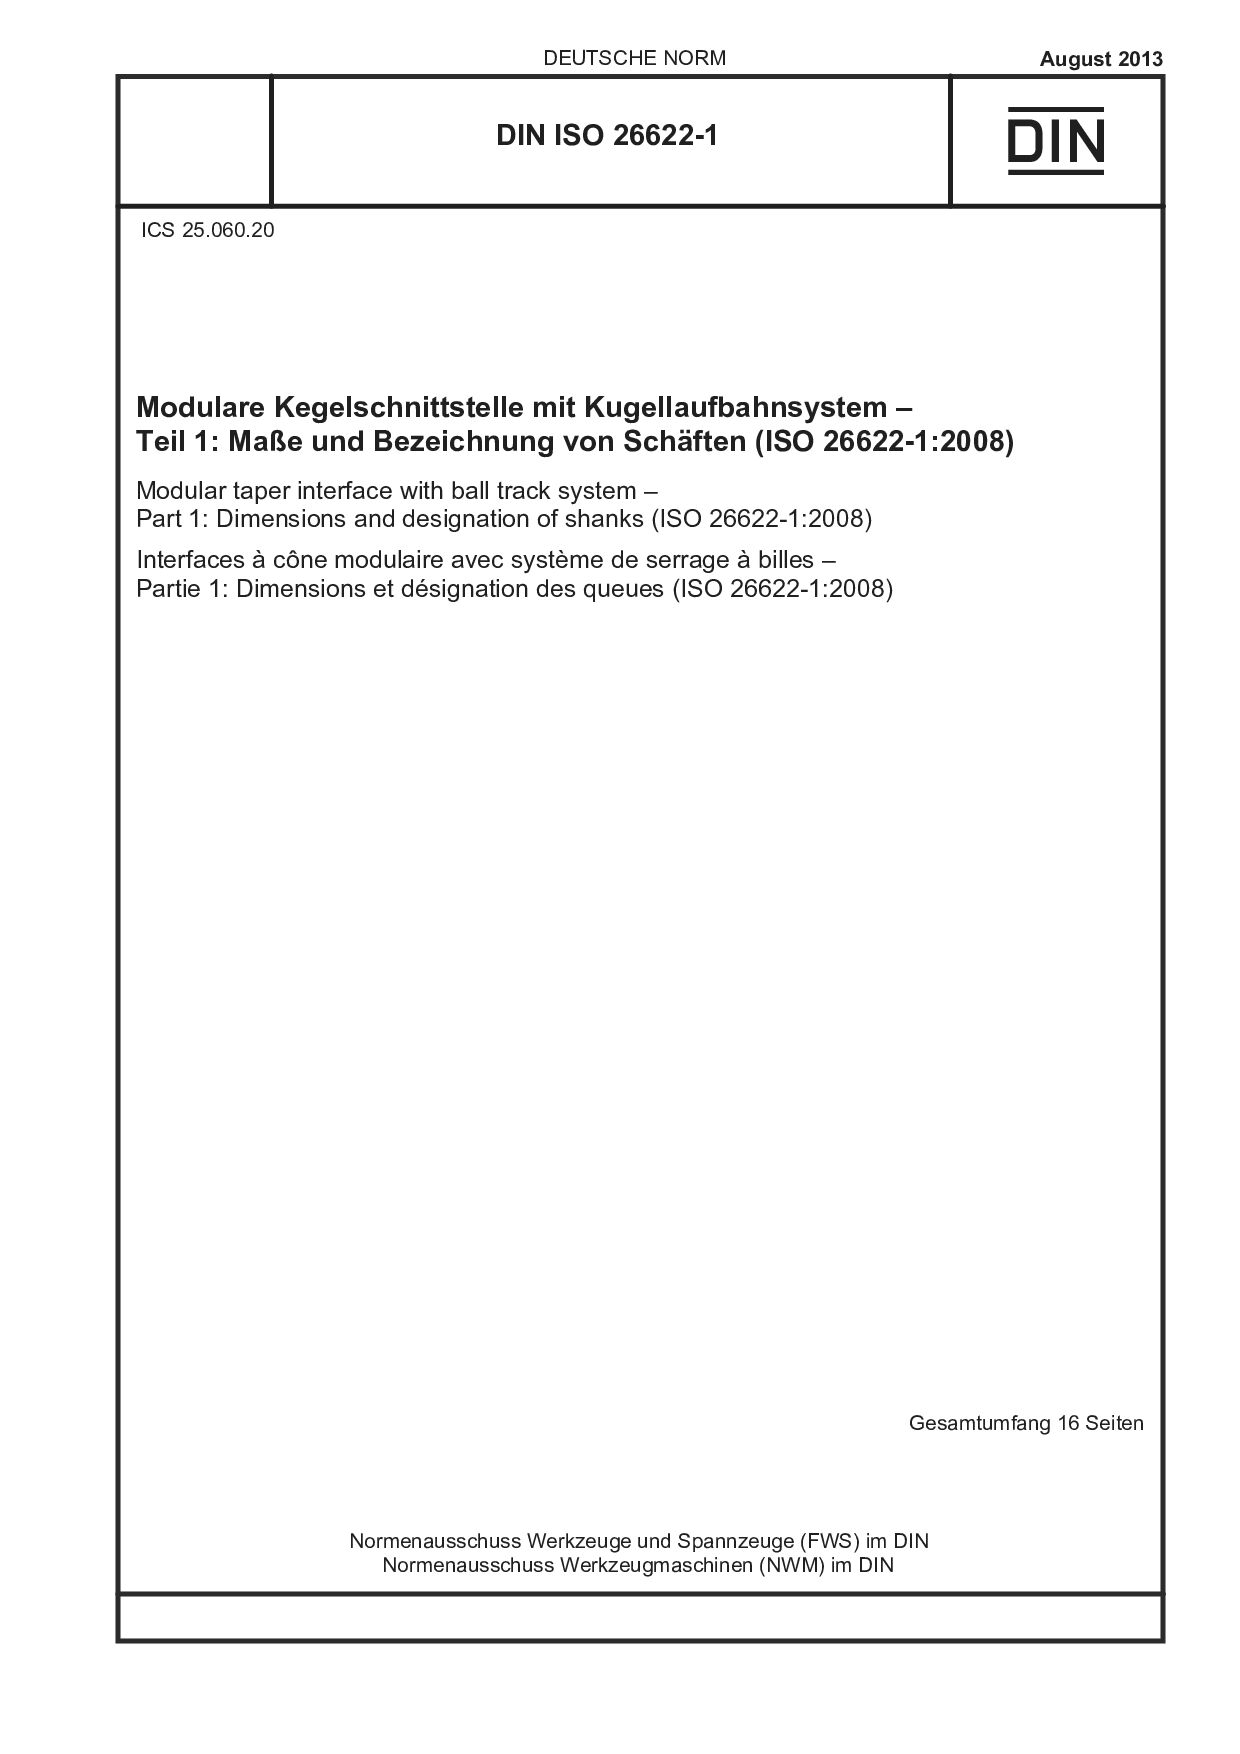 DIN ISO 26622-1:2013